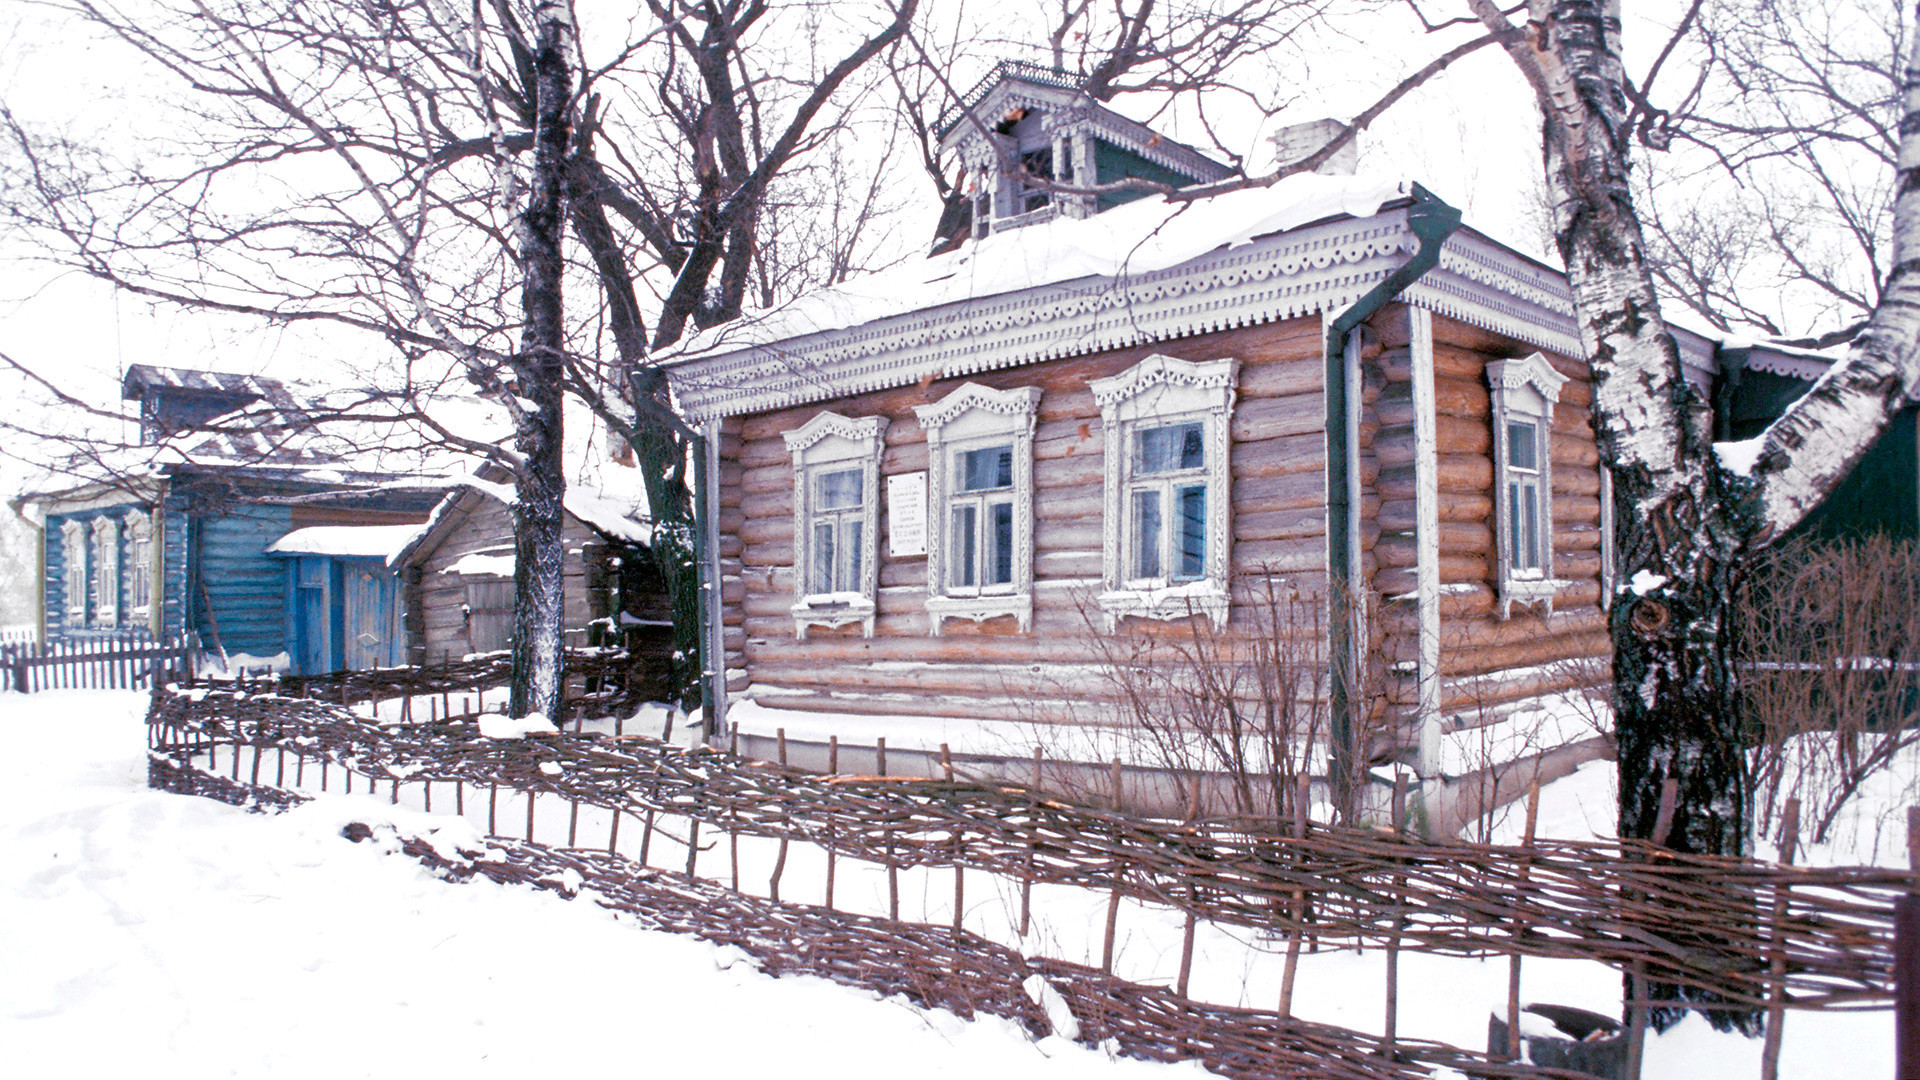 Rumah penyair Sergey Yesenin di Desa Konstantinovo

